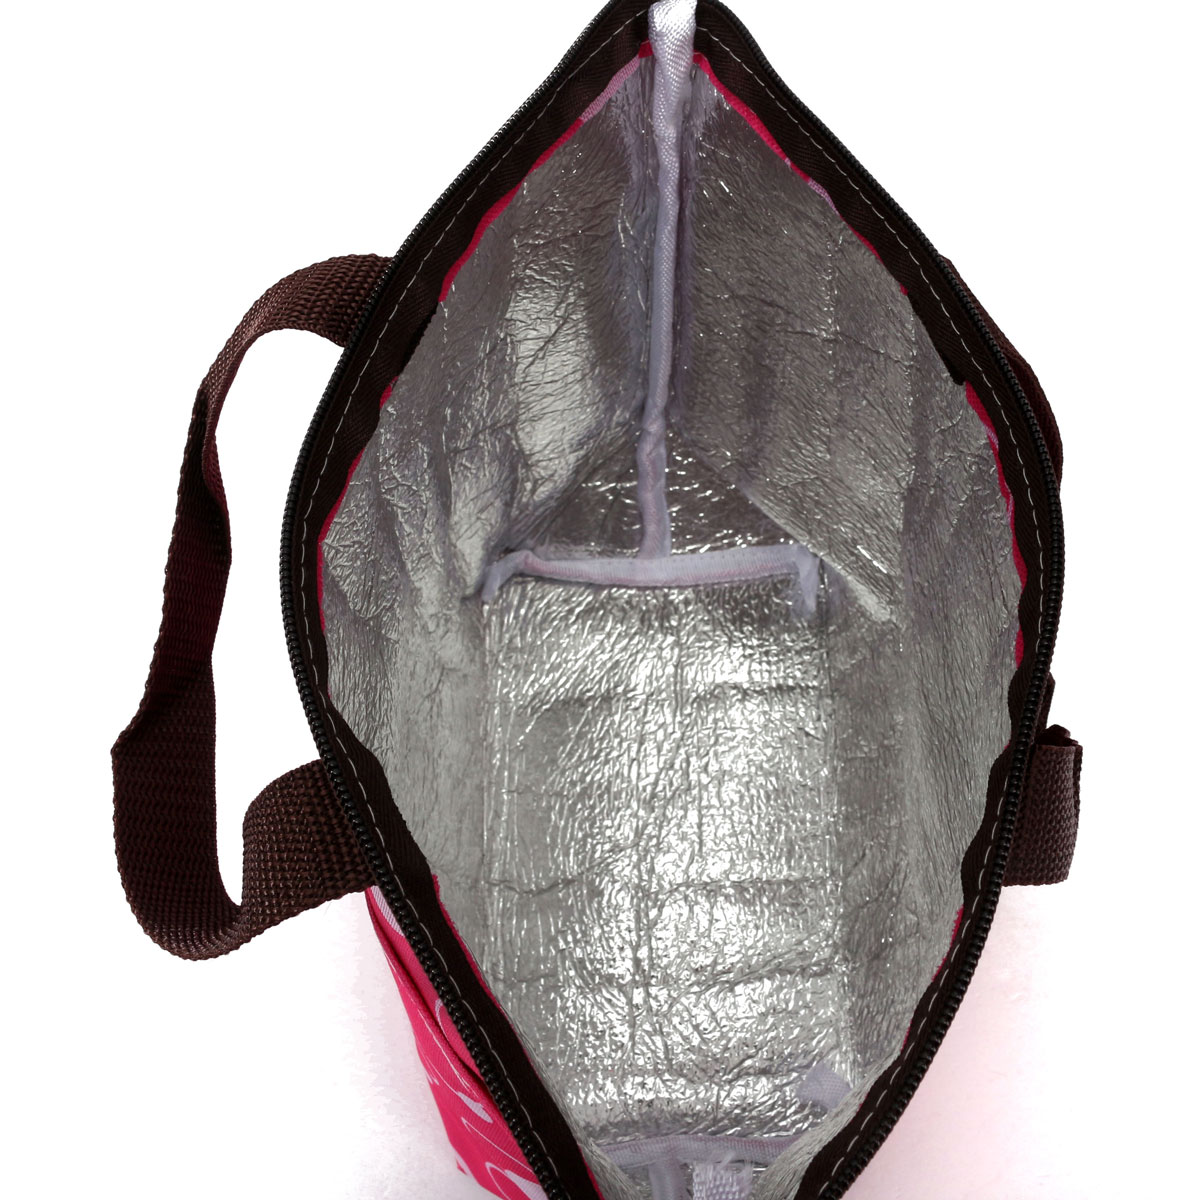 Waterproof Cooler Lunch Picnic Bag Insulated Lunch Handbag